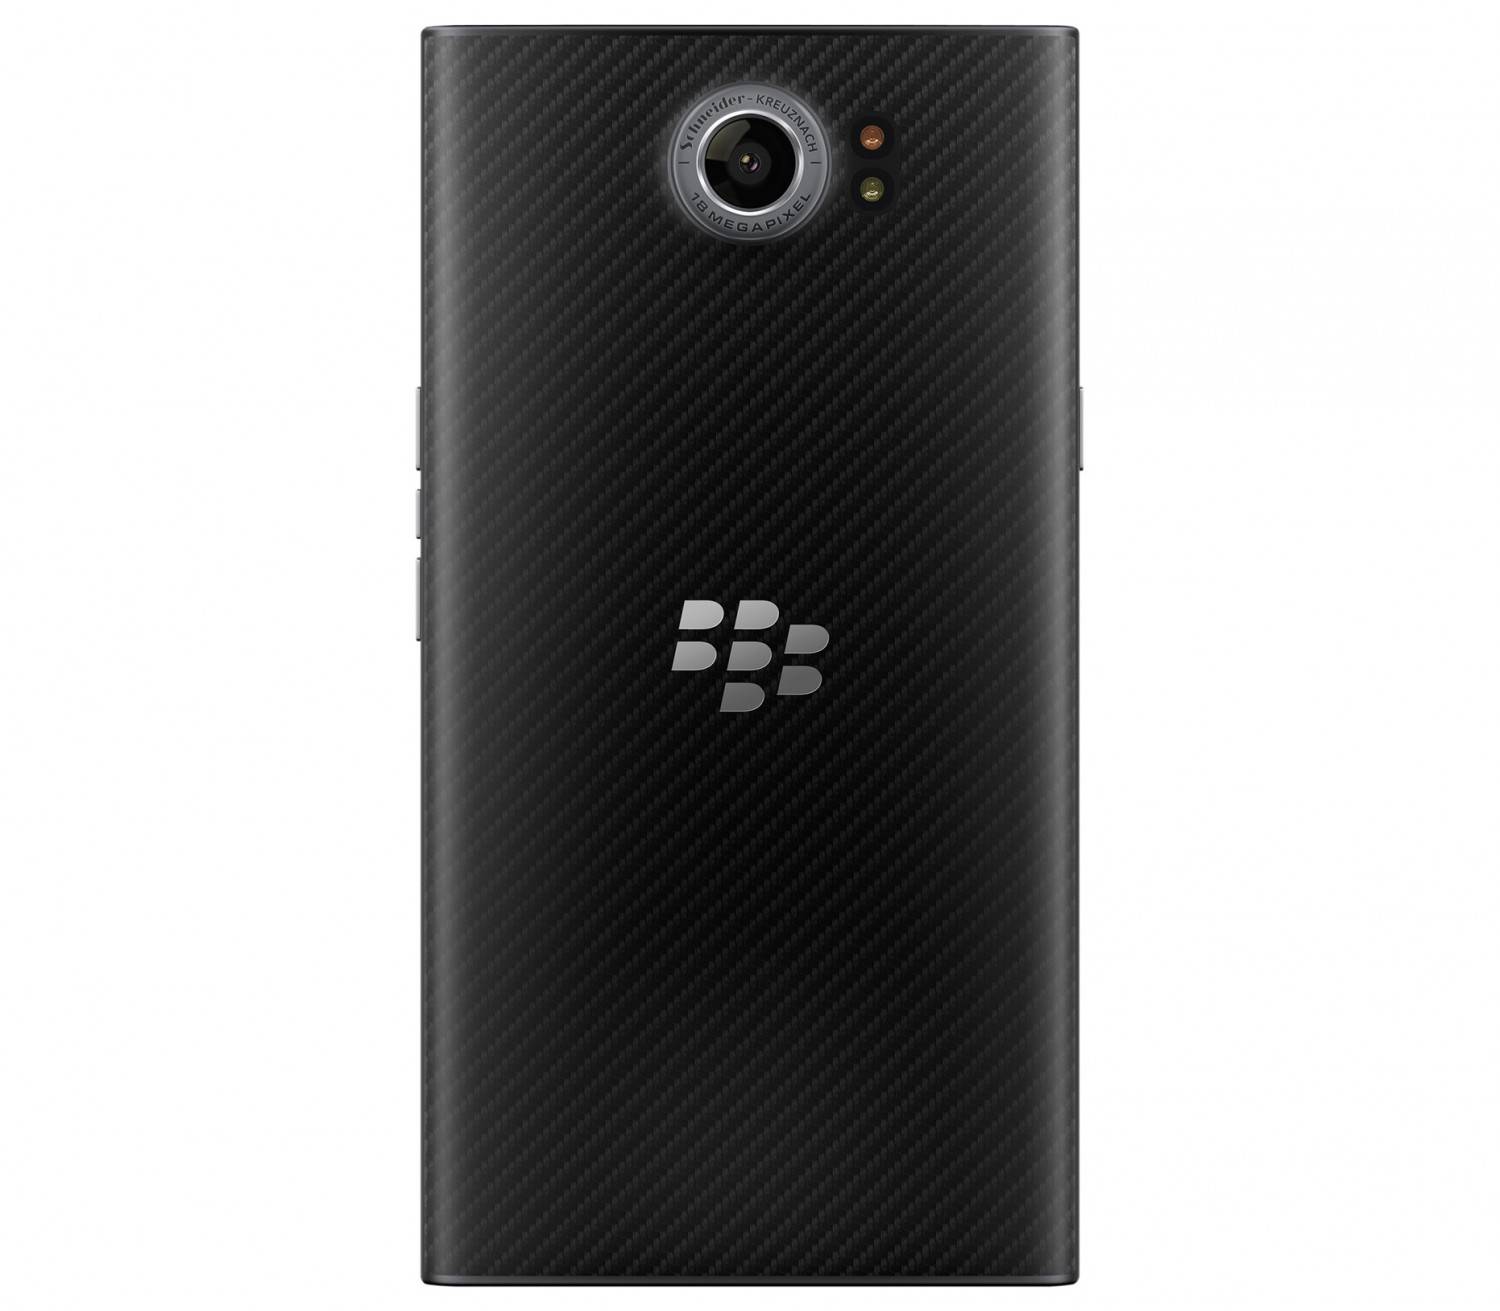 Smartphones Blackberry PRIV im Test, Bild 2